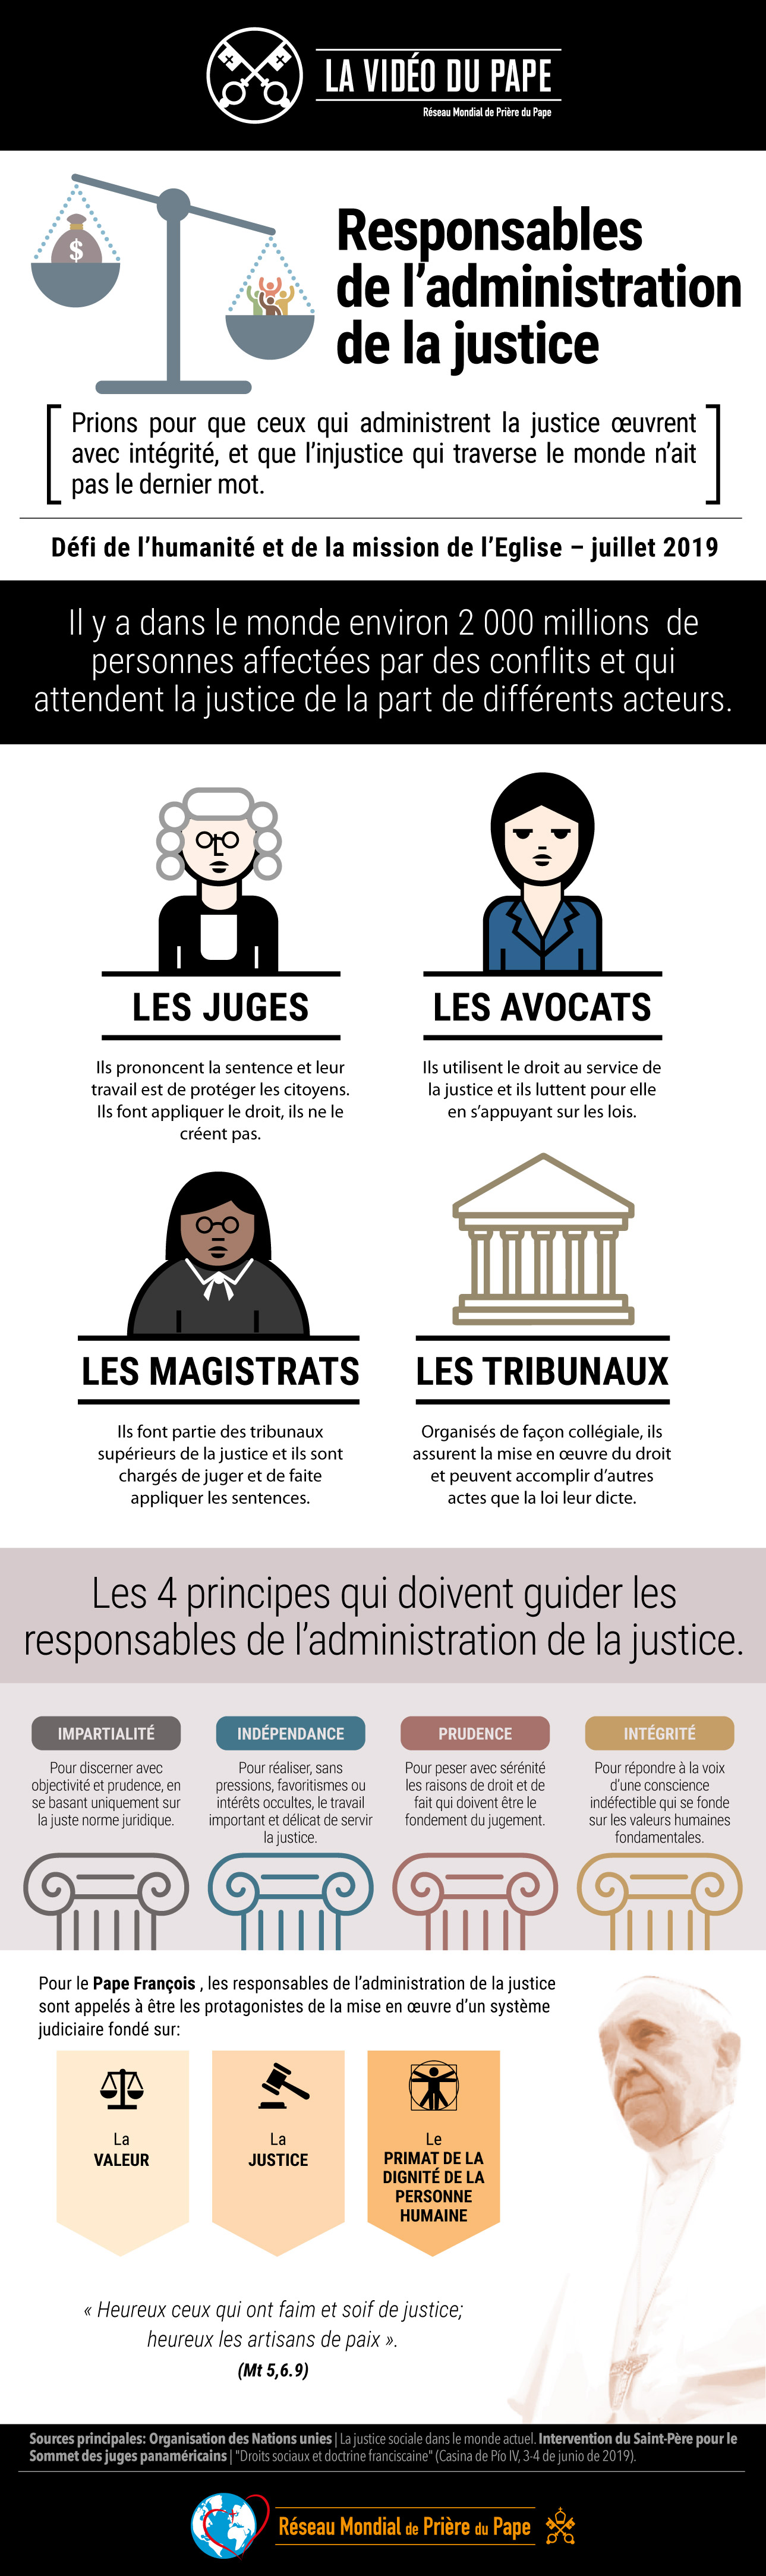 infographic-tpv-7-2019-5-fr-le28099intecc81gritecc81-de-la-justice.jpg